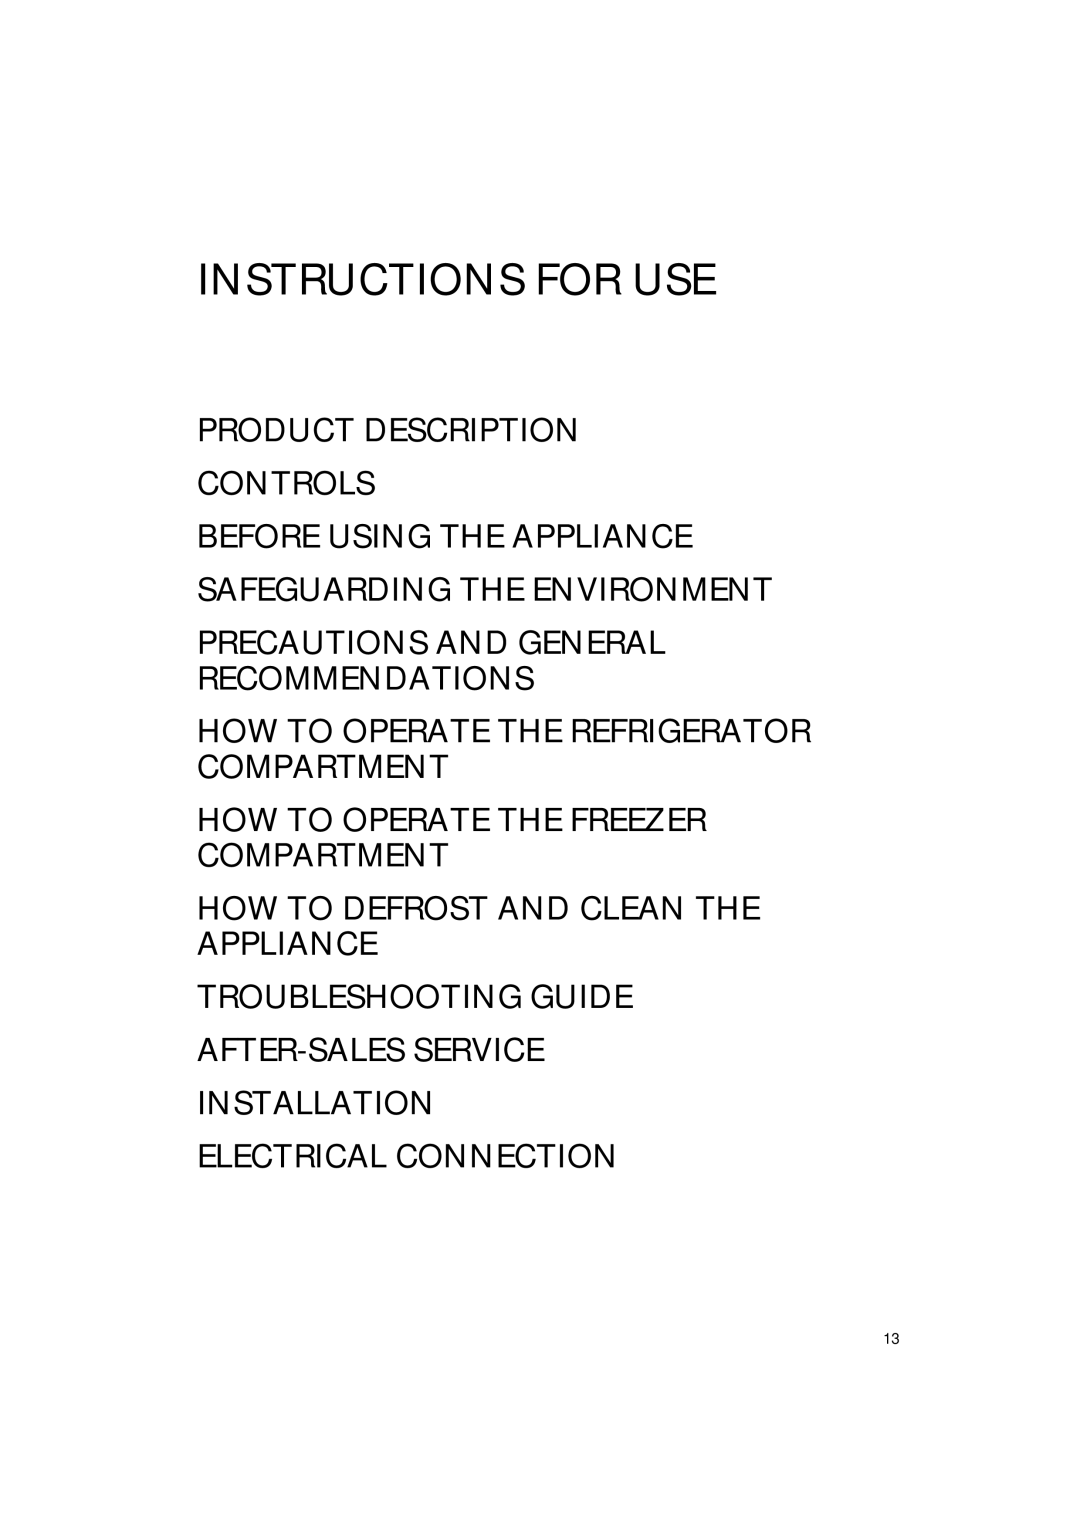 Smeg FR220A1 manual Product Description Controls, Before Using The Appliance, Safeguarding The Environment 